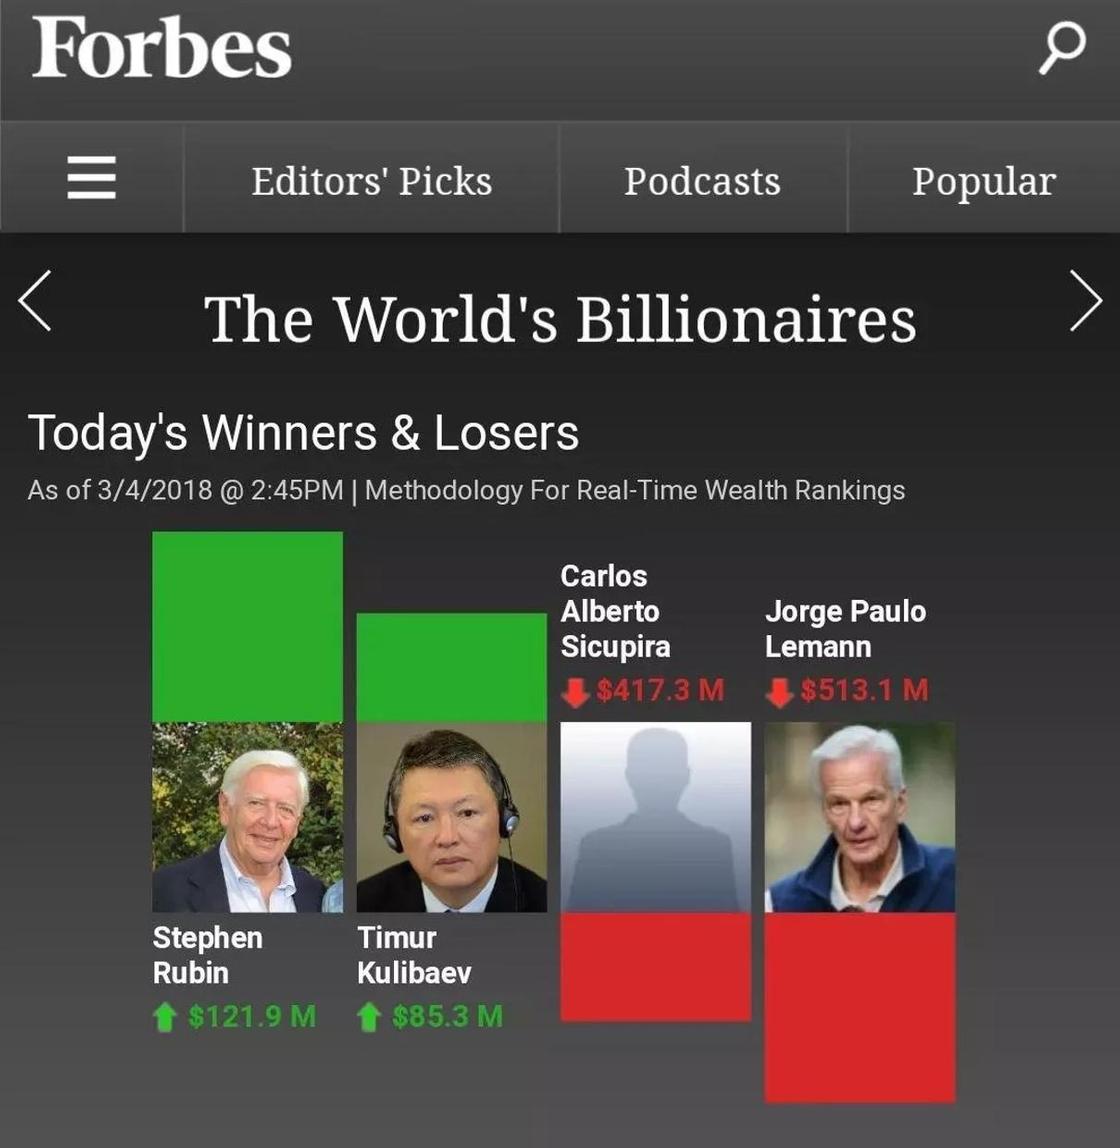 Тимур Кулибаев попал в списки "победителей" Forbes, разбогатев еще на $85 млн